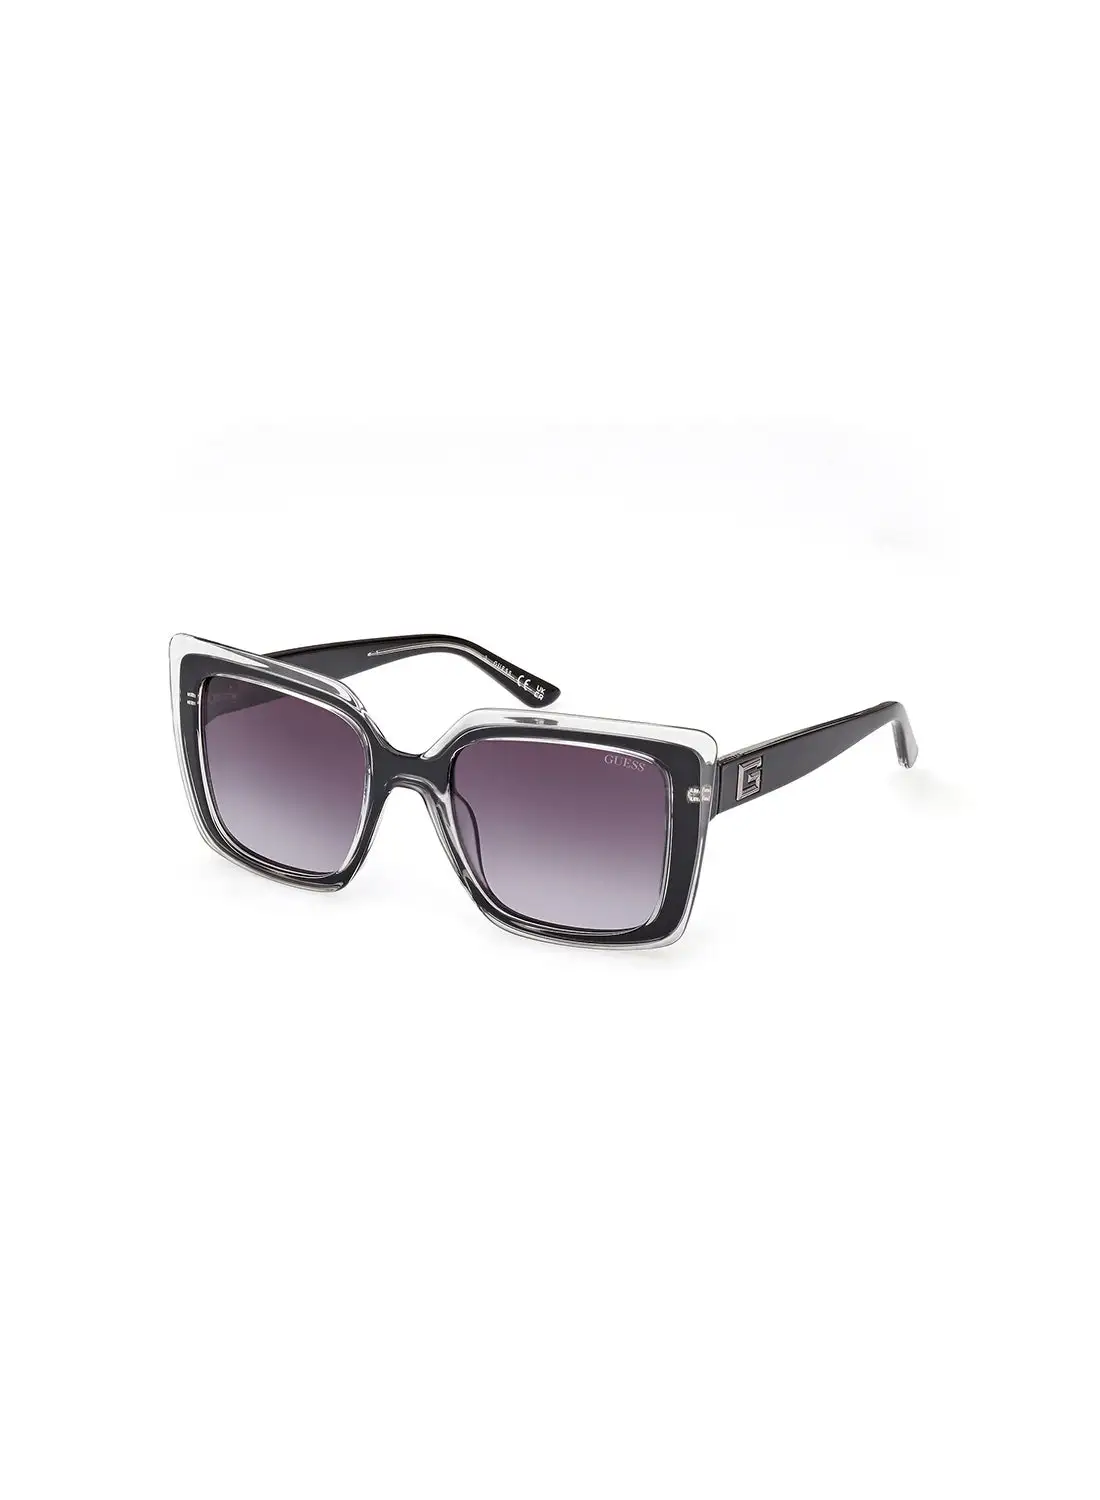 GUESS Women's UV Protection Square Sunglasses - GU790805B52 - Lens Size: 52 Mm